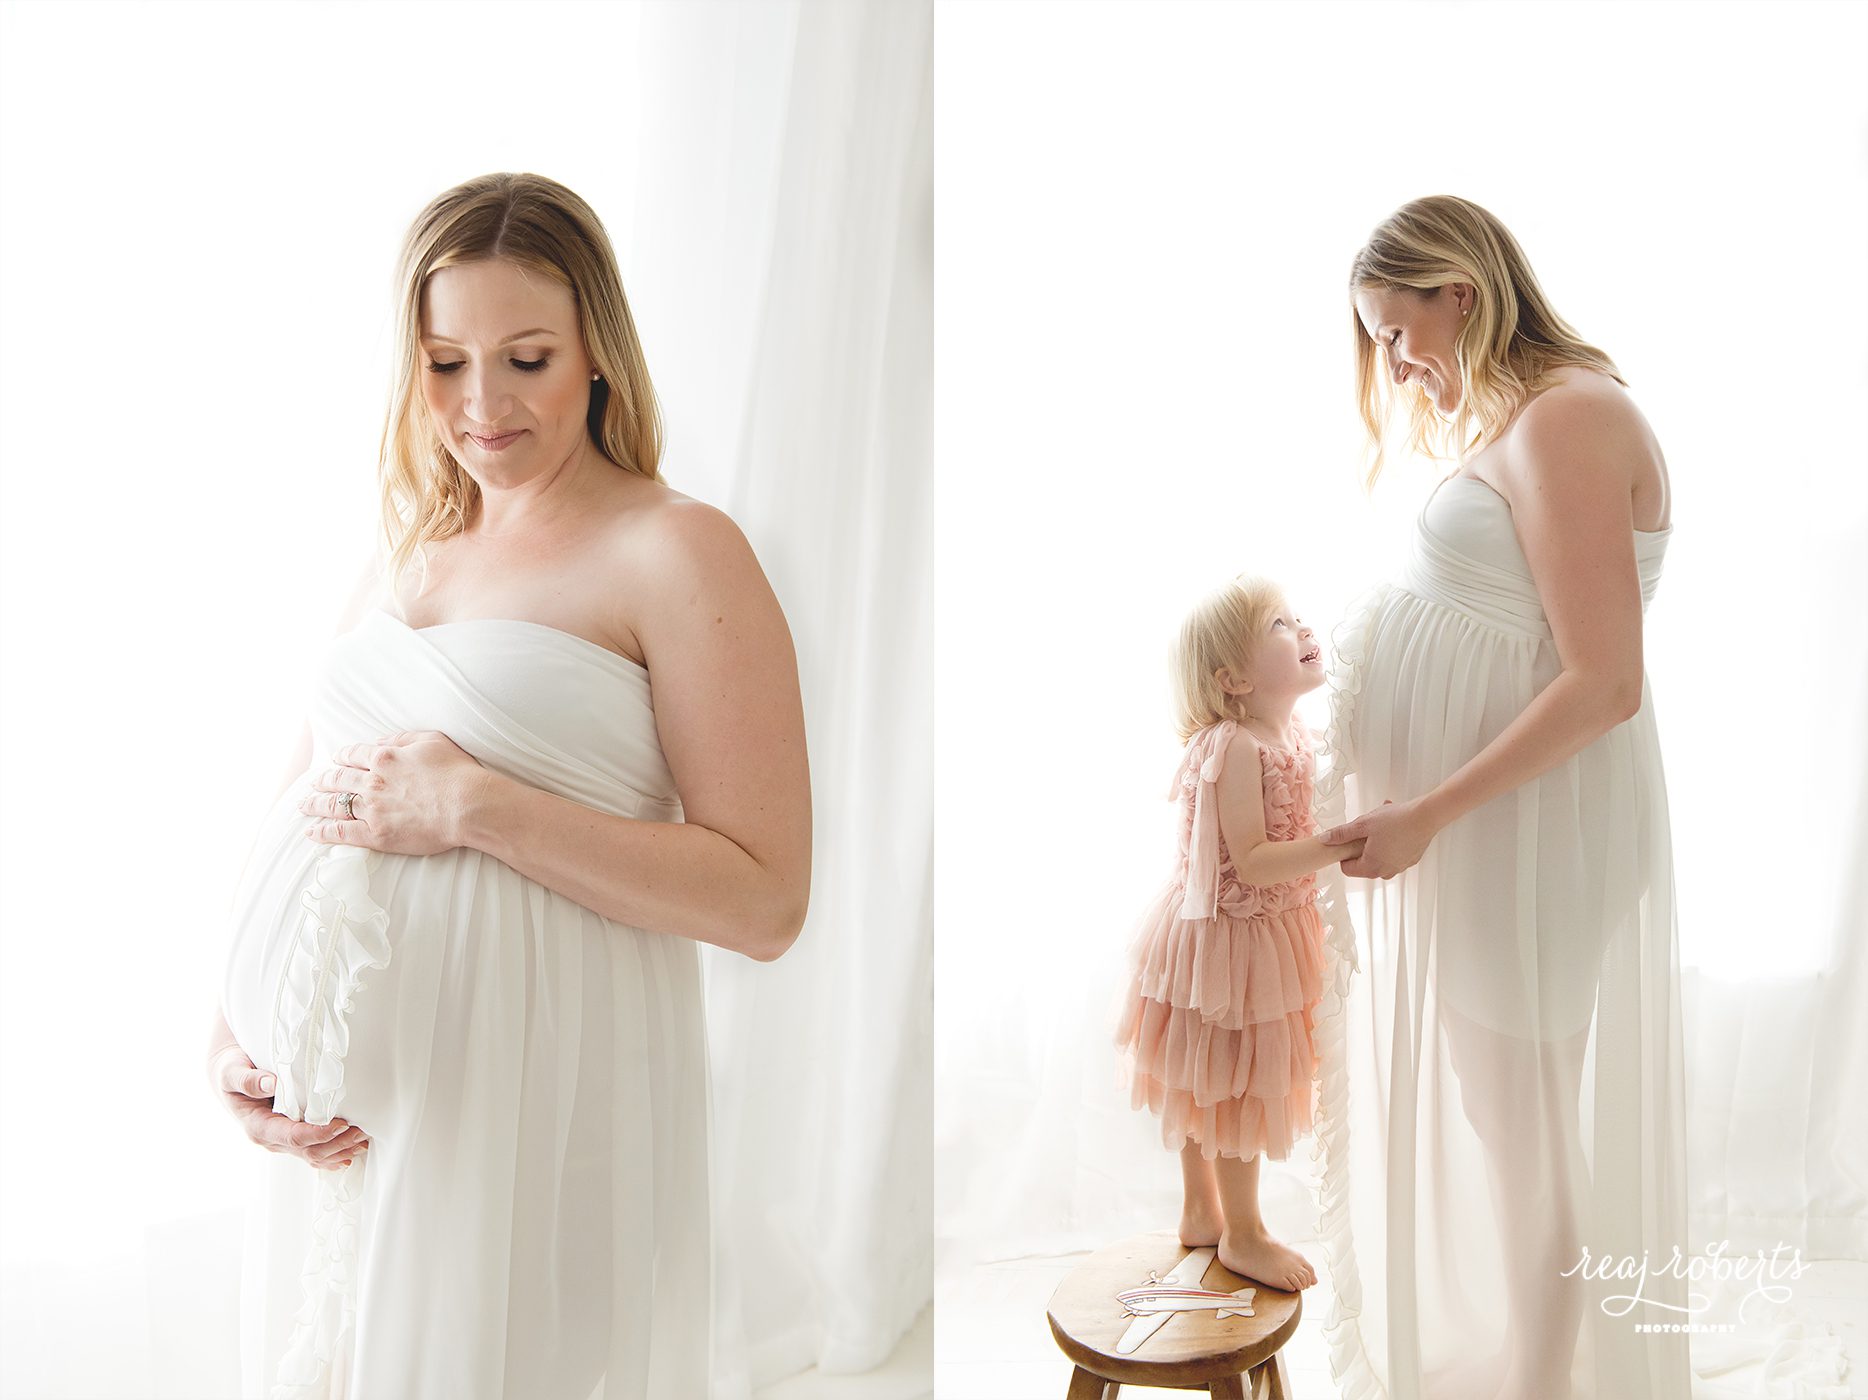 Maternity sibling photographer | Reaj Roberts Photography